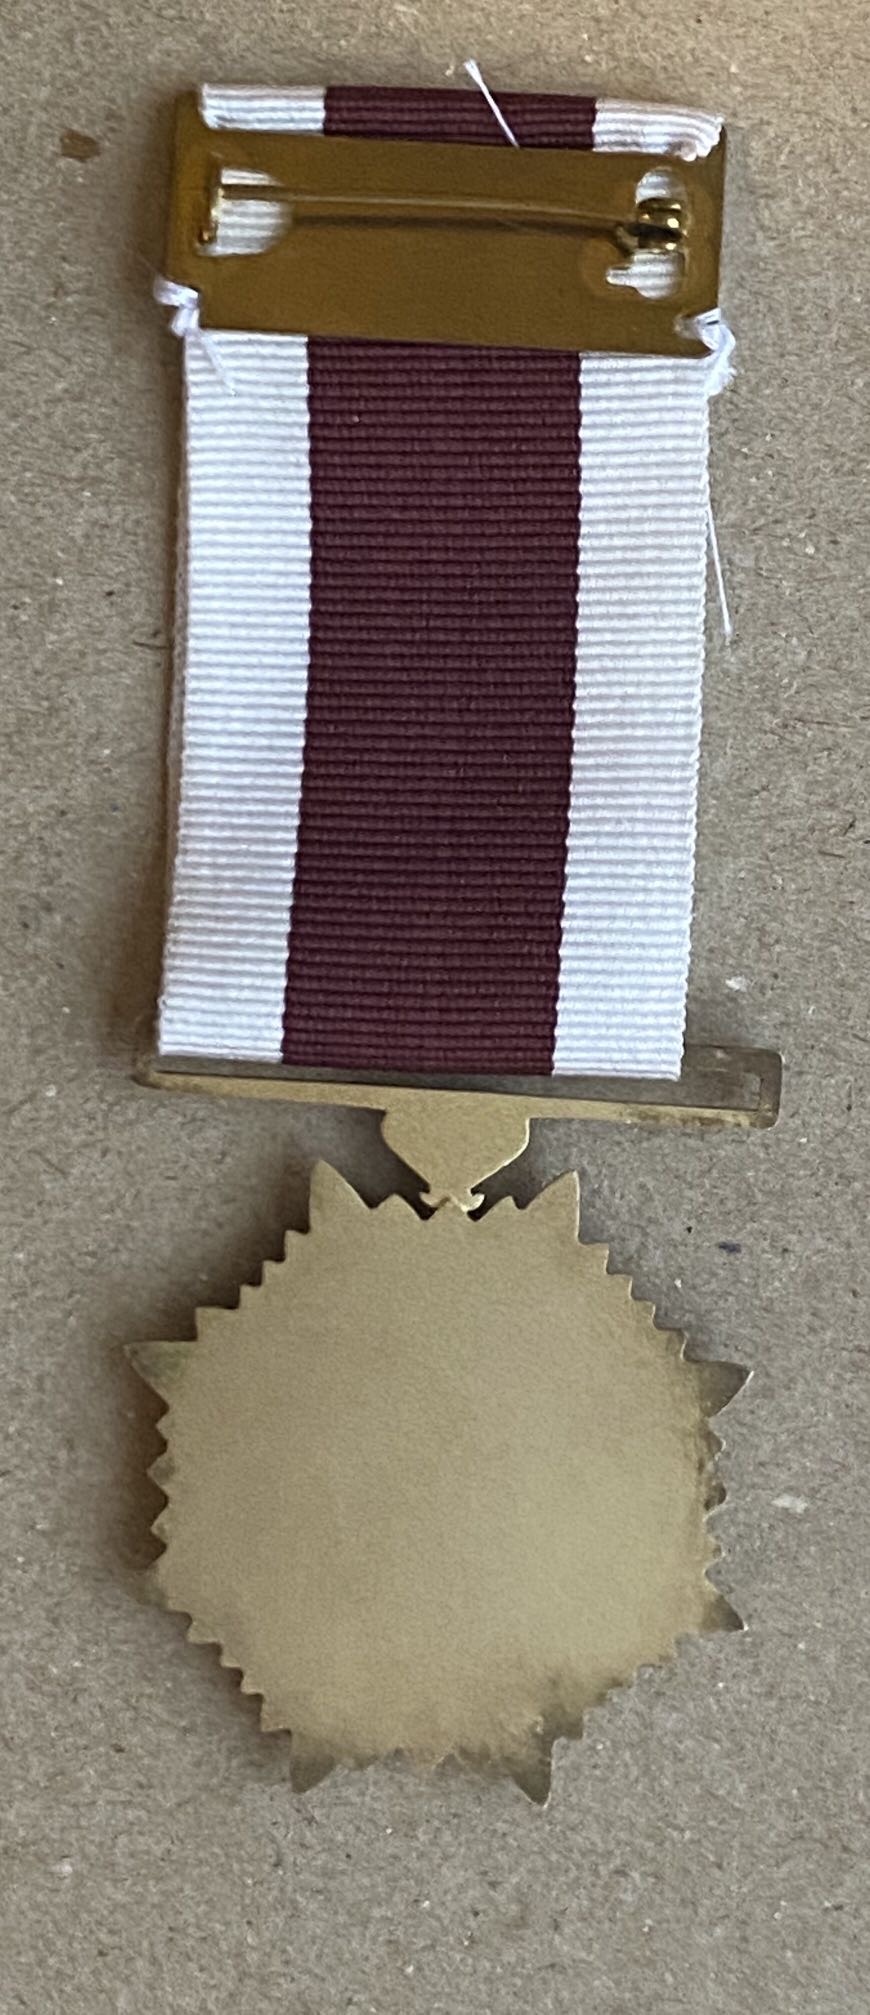 Qatar Emblem of Military Duty  Medal Badge Order Nichan دولة قطر ميدالية الواجب  وسام نادر